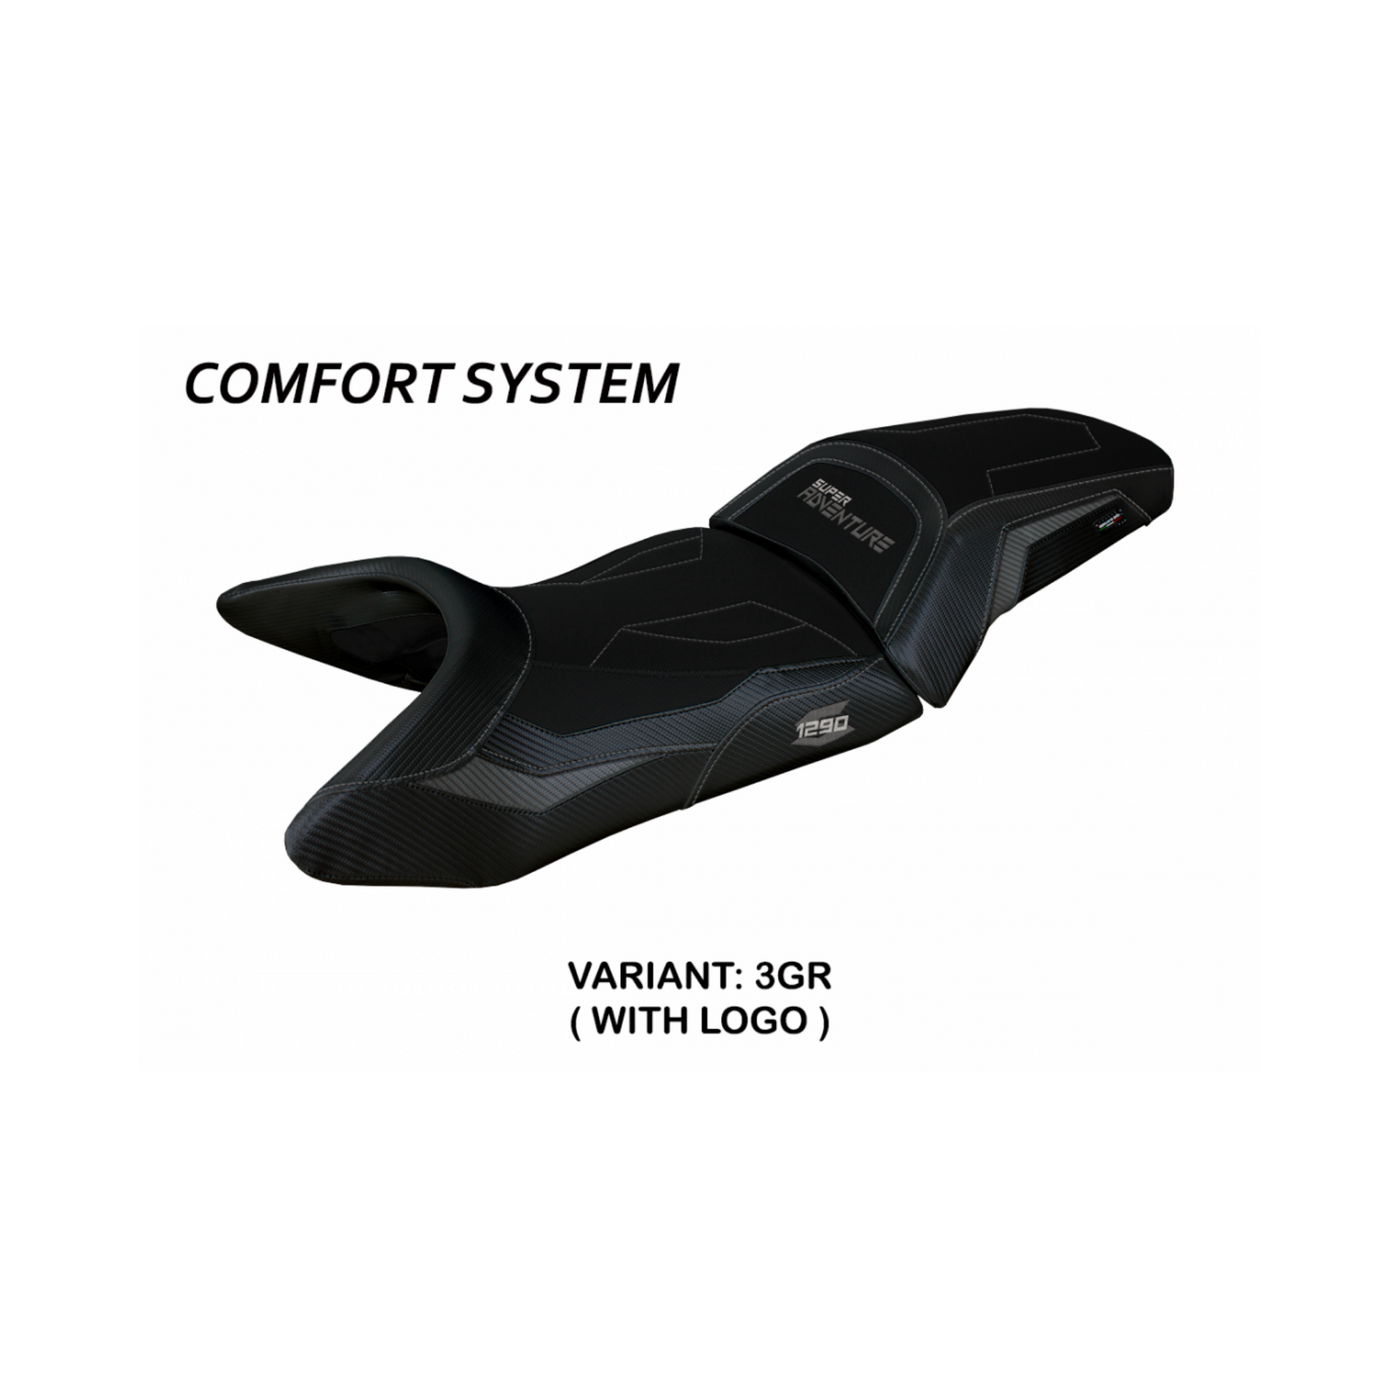 Lumiar Comfort System Seat Cover for KTM 1290 Super Adventure S (2021-2022)